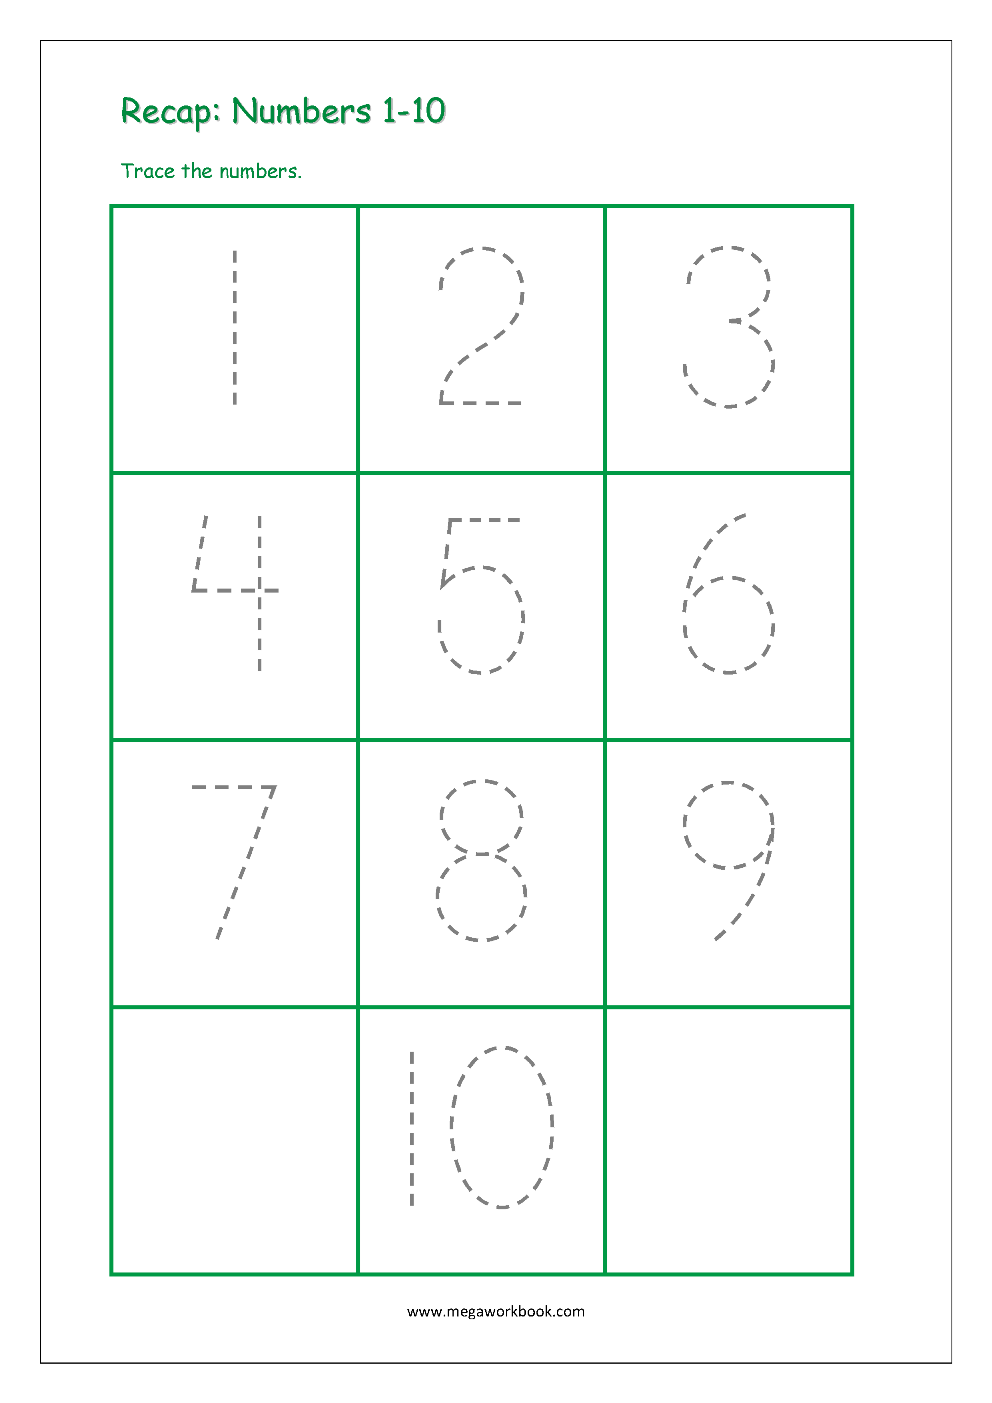 tracing-numbers-1-10-printable